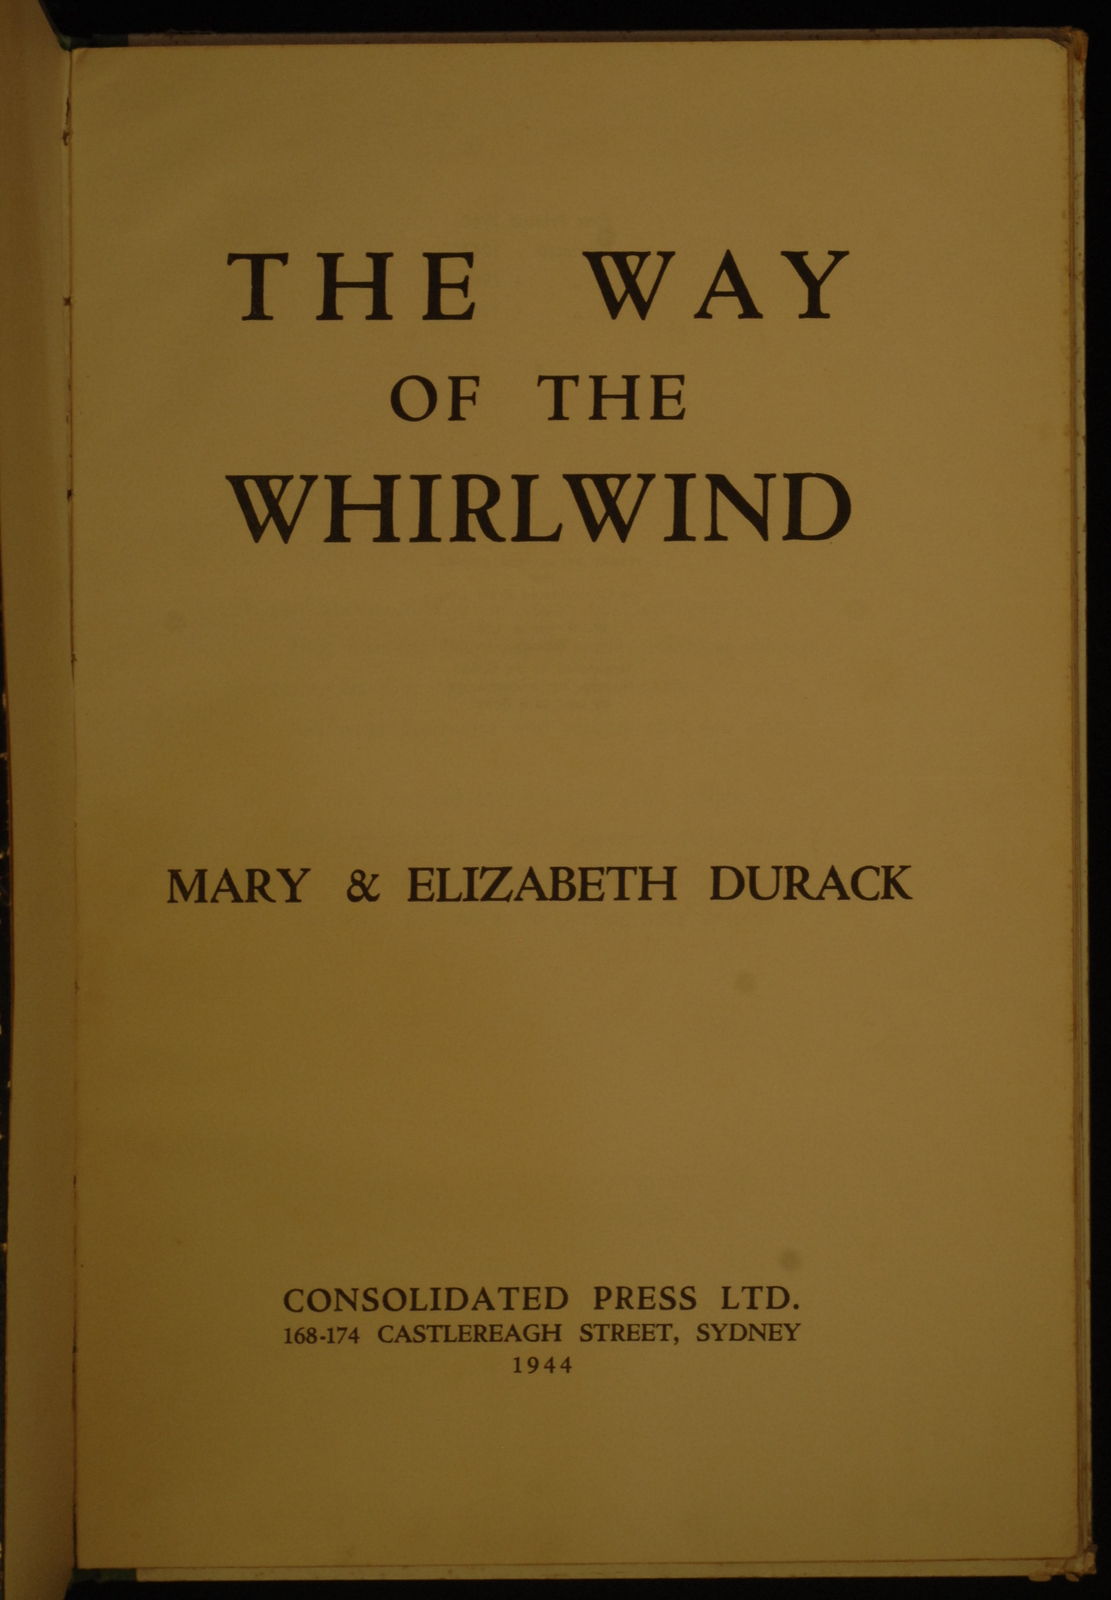 mbb006594c_-_Durack_Mary_-_The_Way_Of_The_Whirlwind_-_ELIZABETH_DURACK.jpg